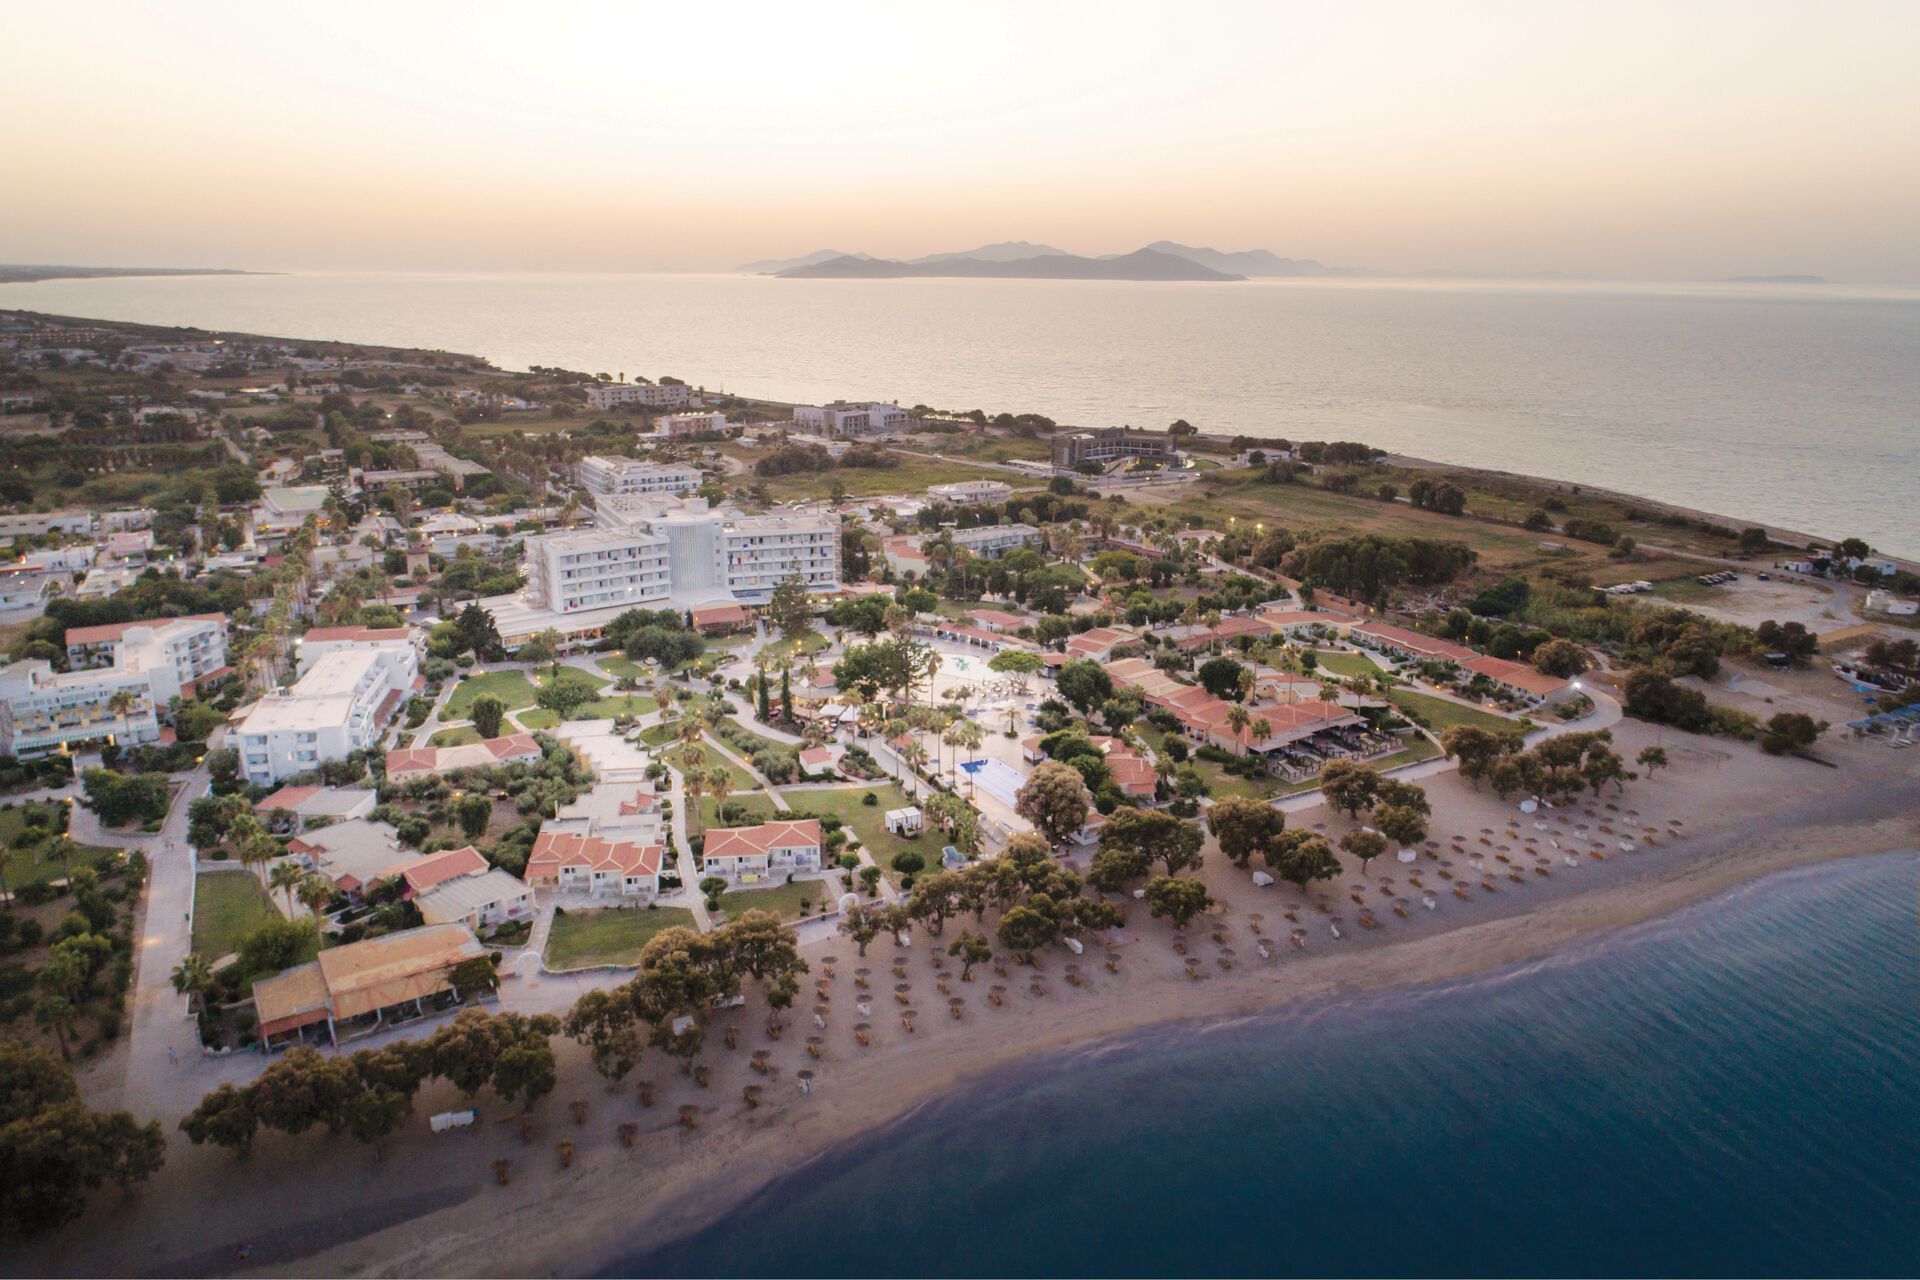 Grèce - Iles grecques - Kos - Hôtel Atlantis Beach Resort 4*